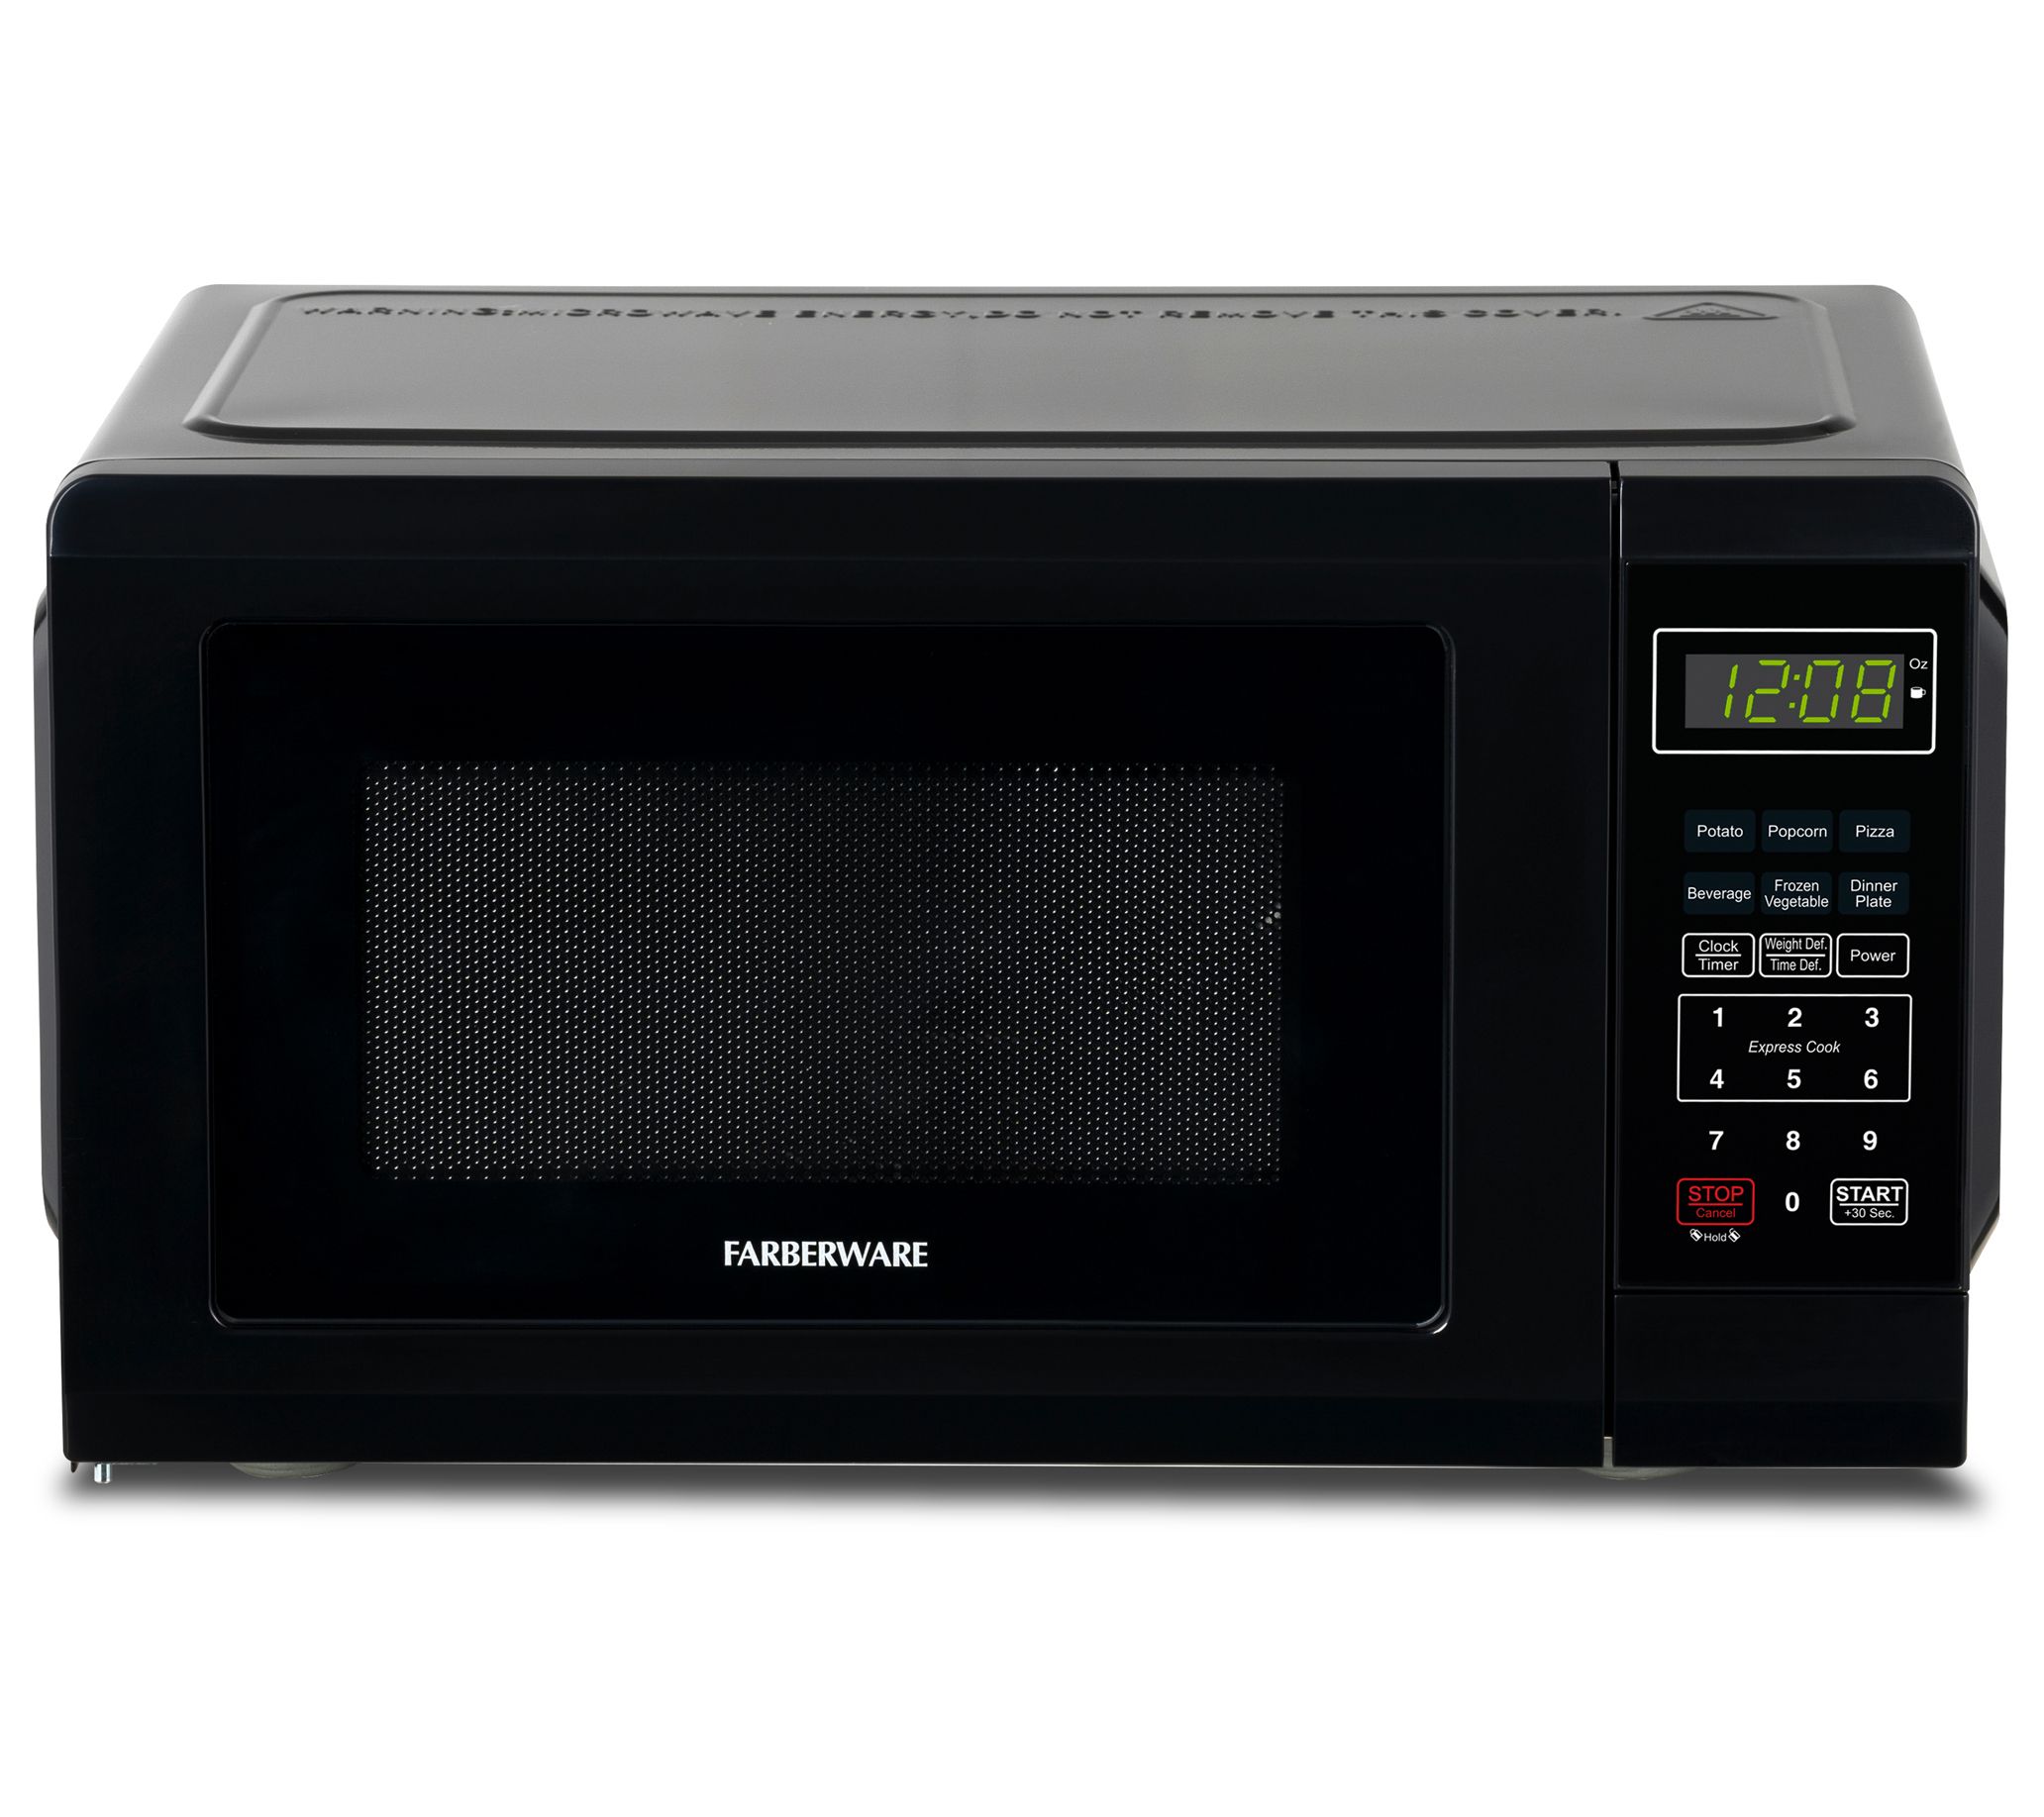 Nostalgia Retro 0.7 cu. ft. 700-Watt Countertop Microwave Oven in